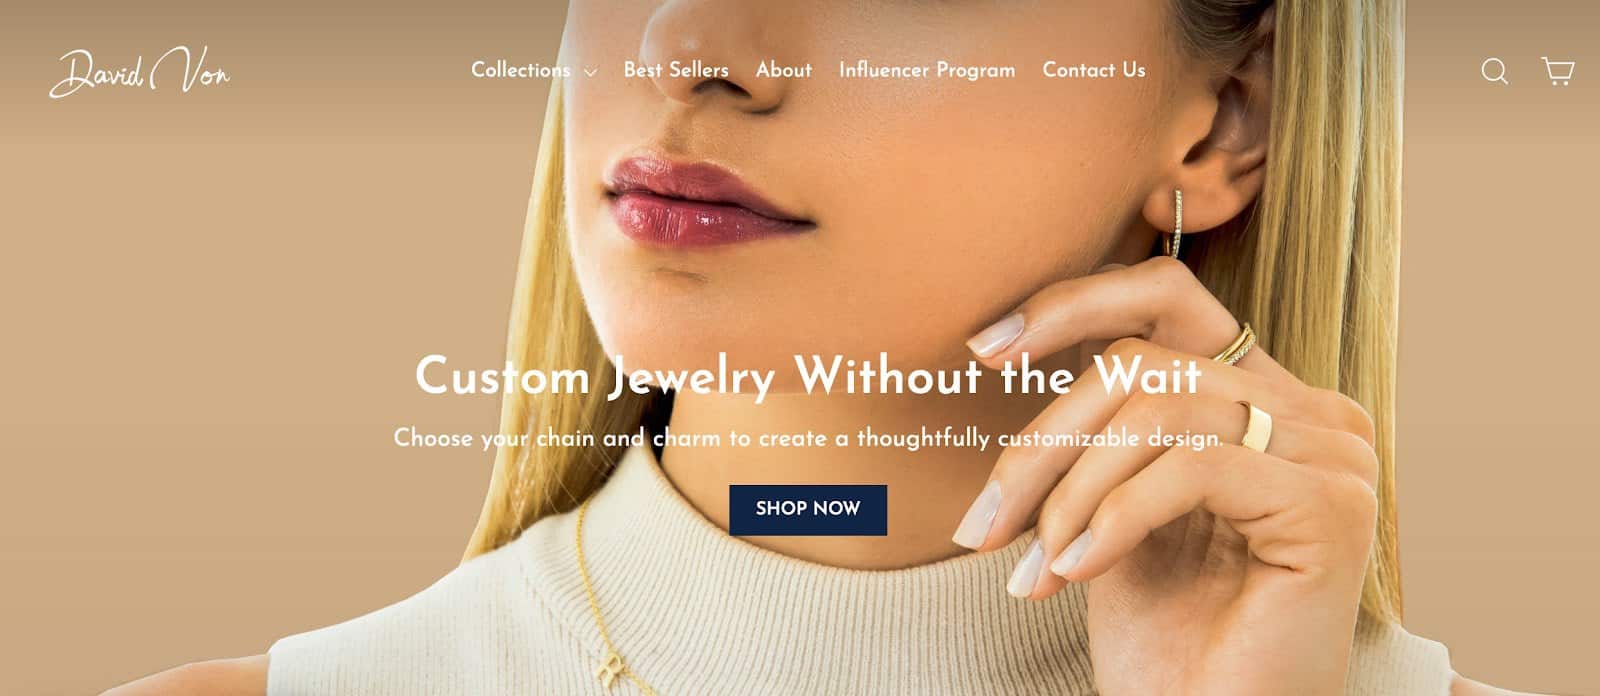 David Von custom jewelry website | Woman touching her earring